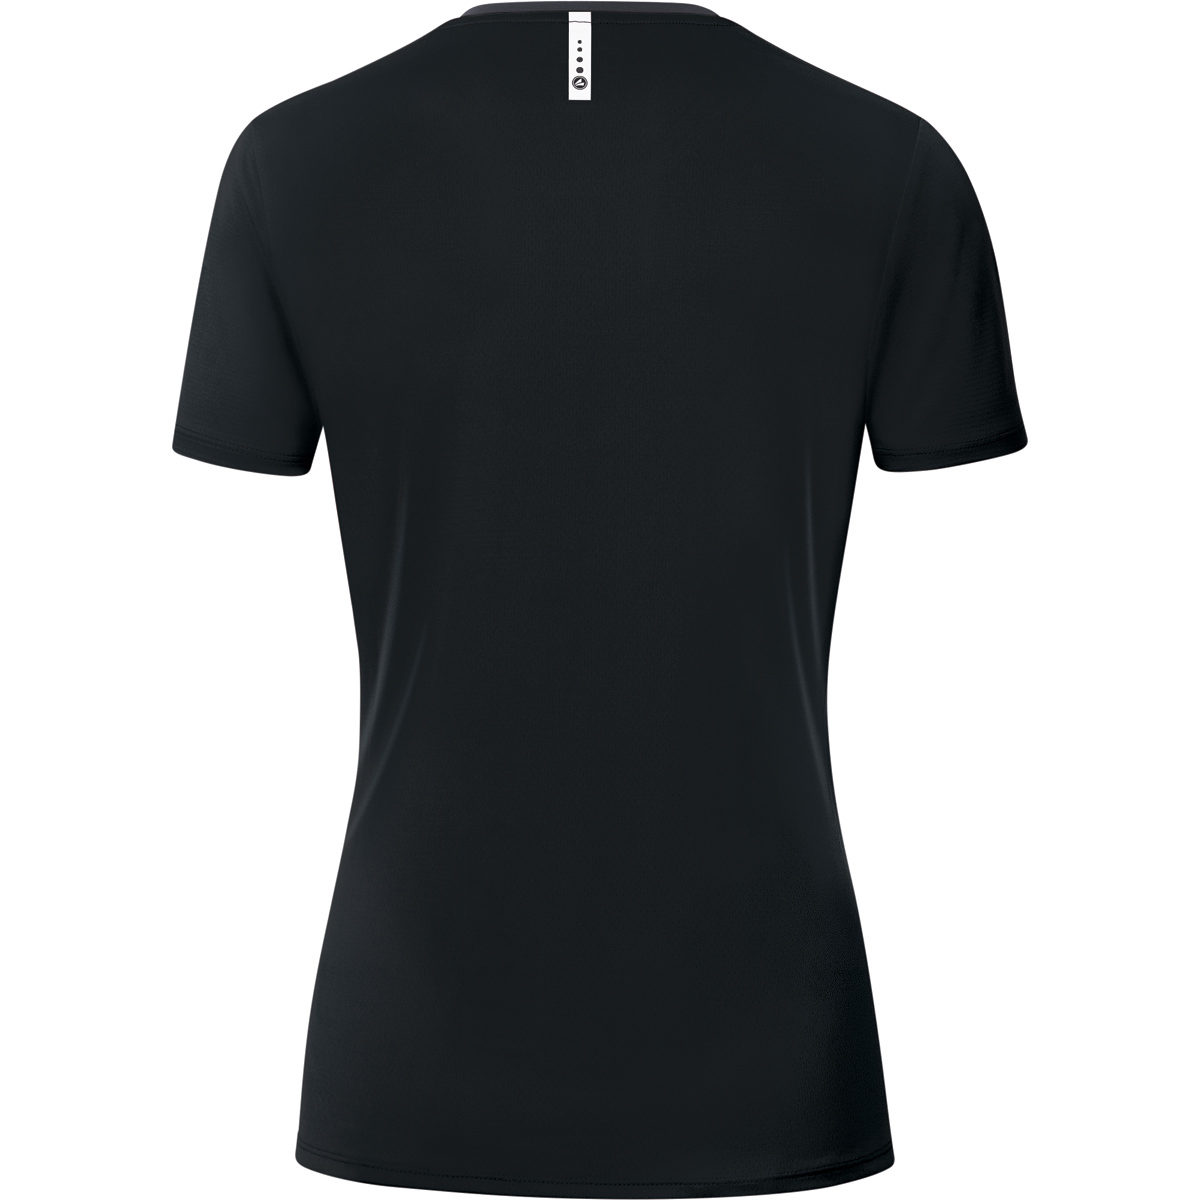 6120 schwarz/anthrazit, 2.0 Champ T-Shirt JAKO Gr. Damen, 44,